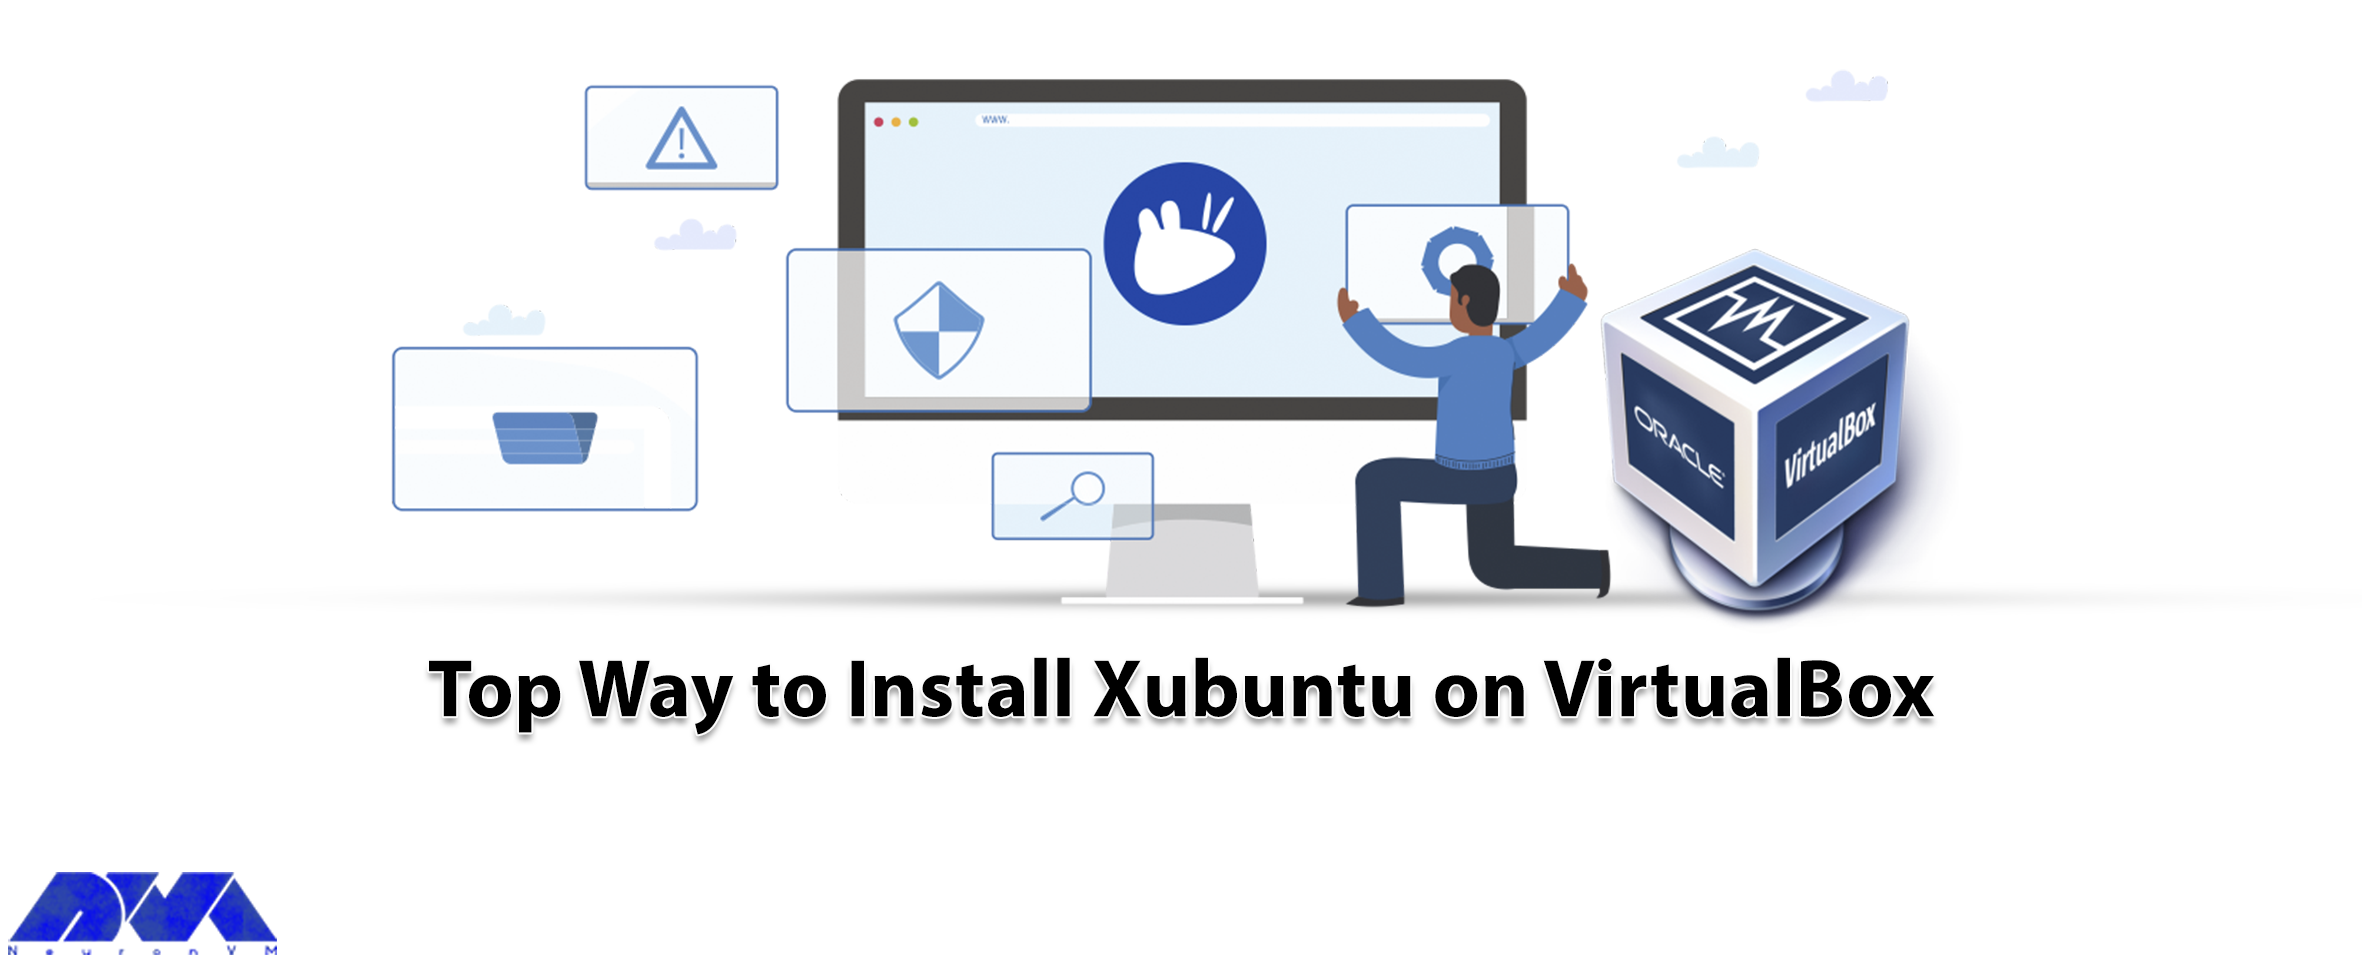 Top way to Install Xubuntu on VirtualBox - NeuronVM